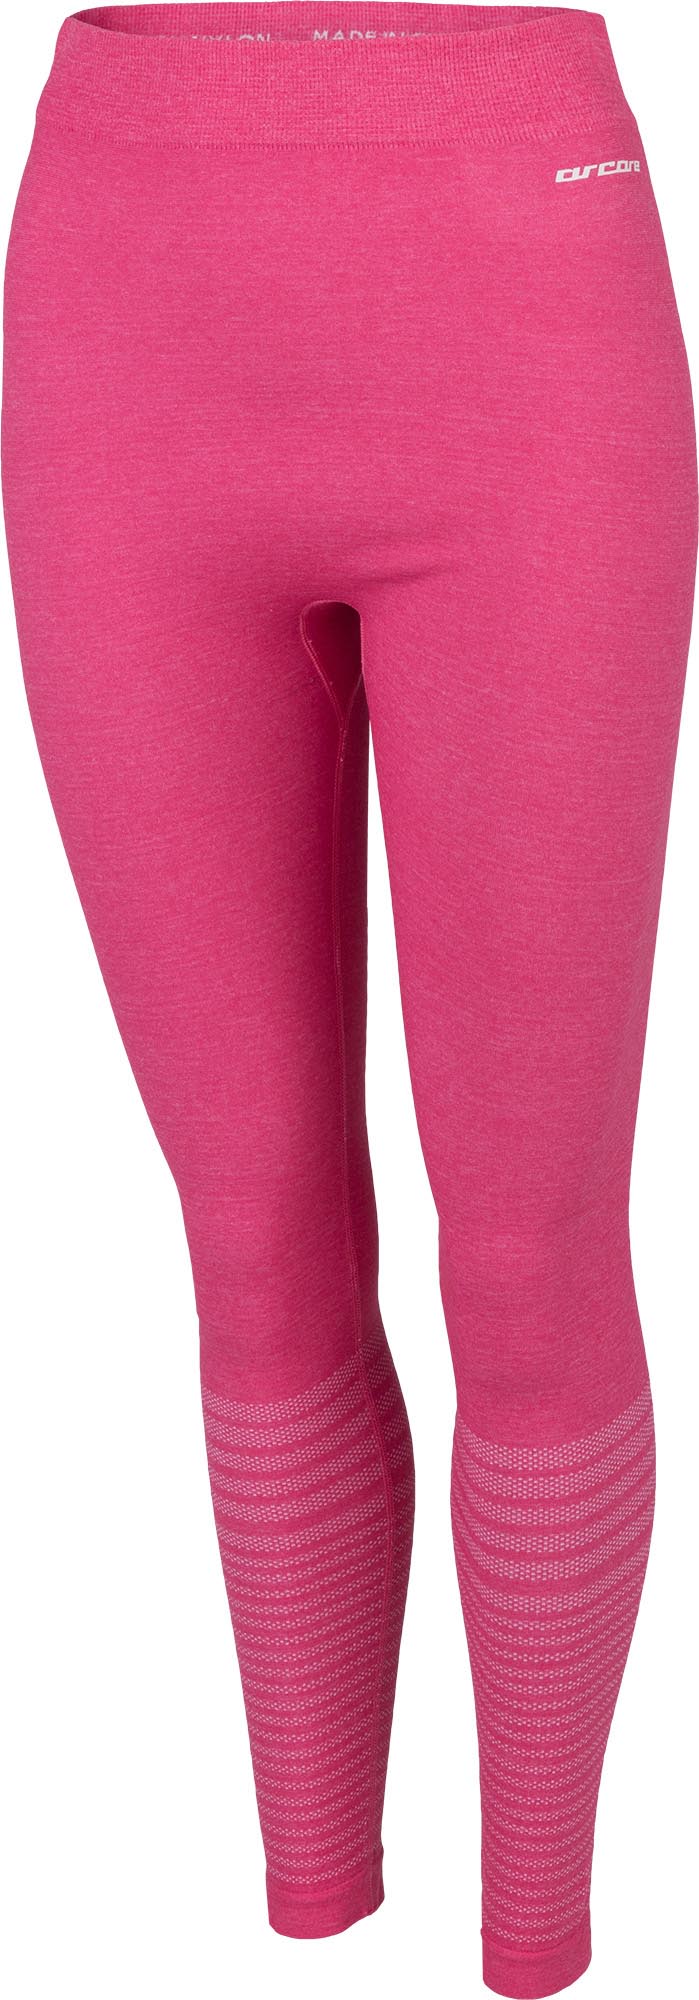 Women's seamless thermal pants